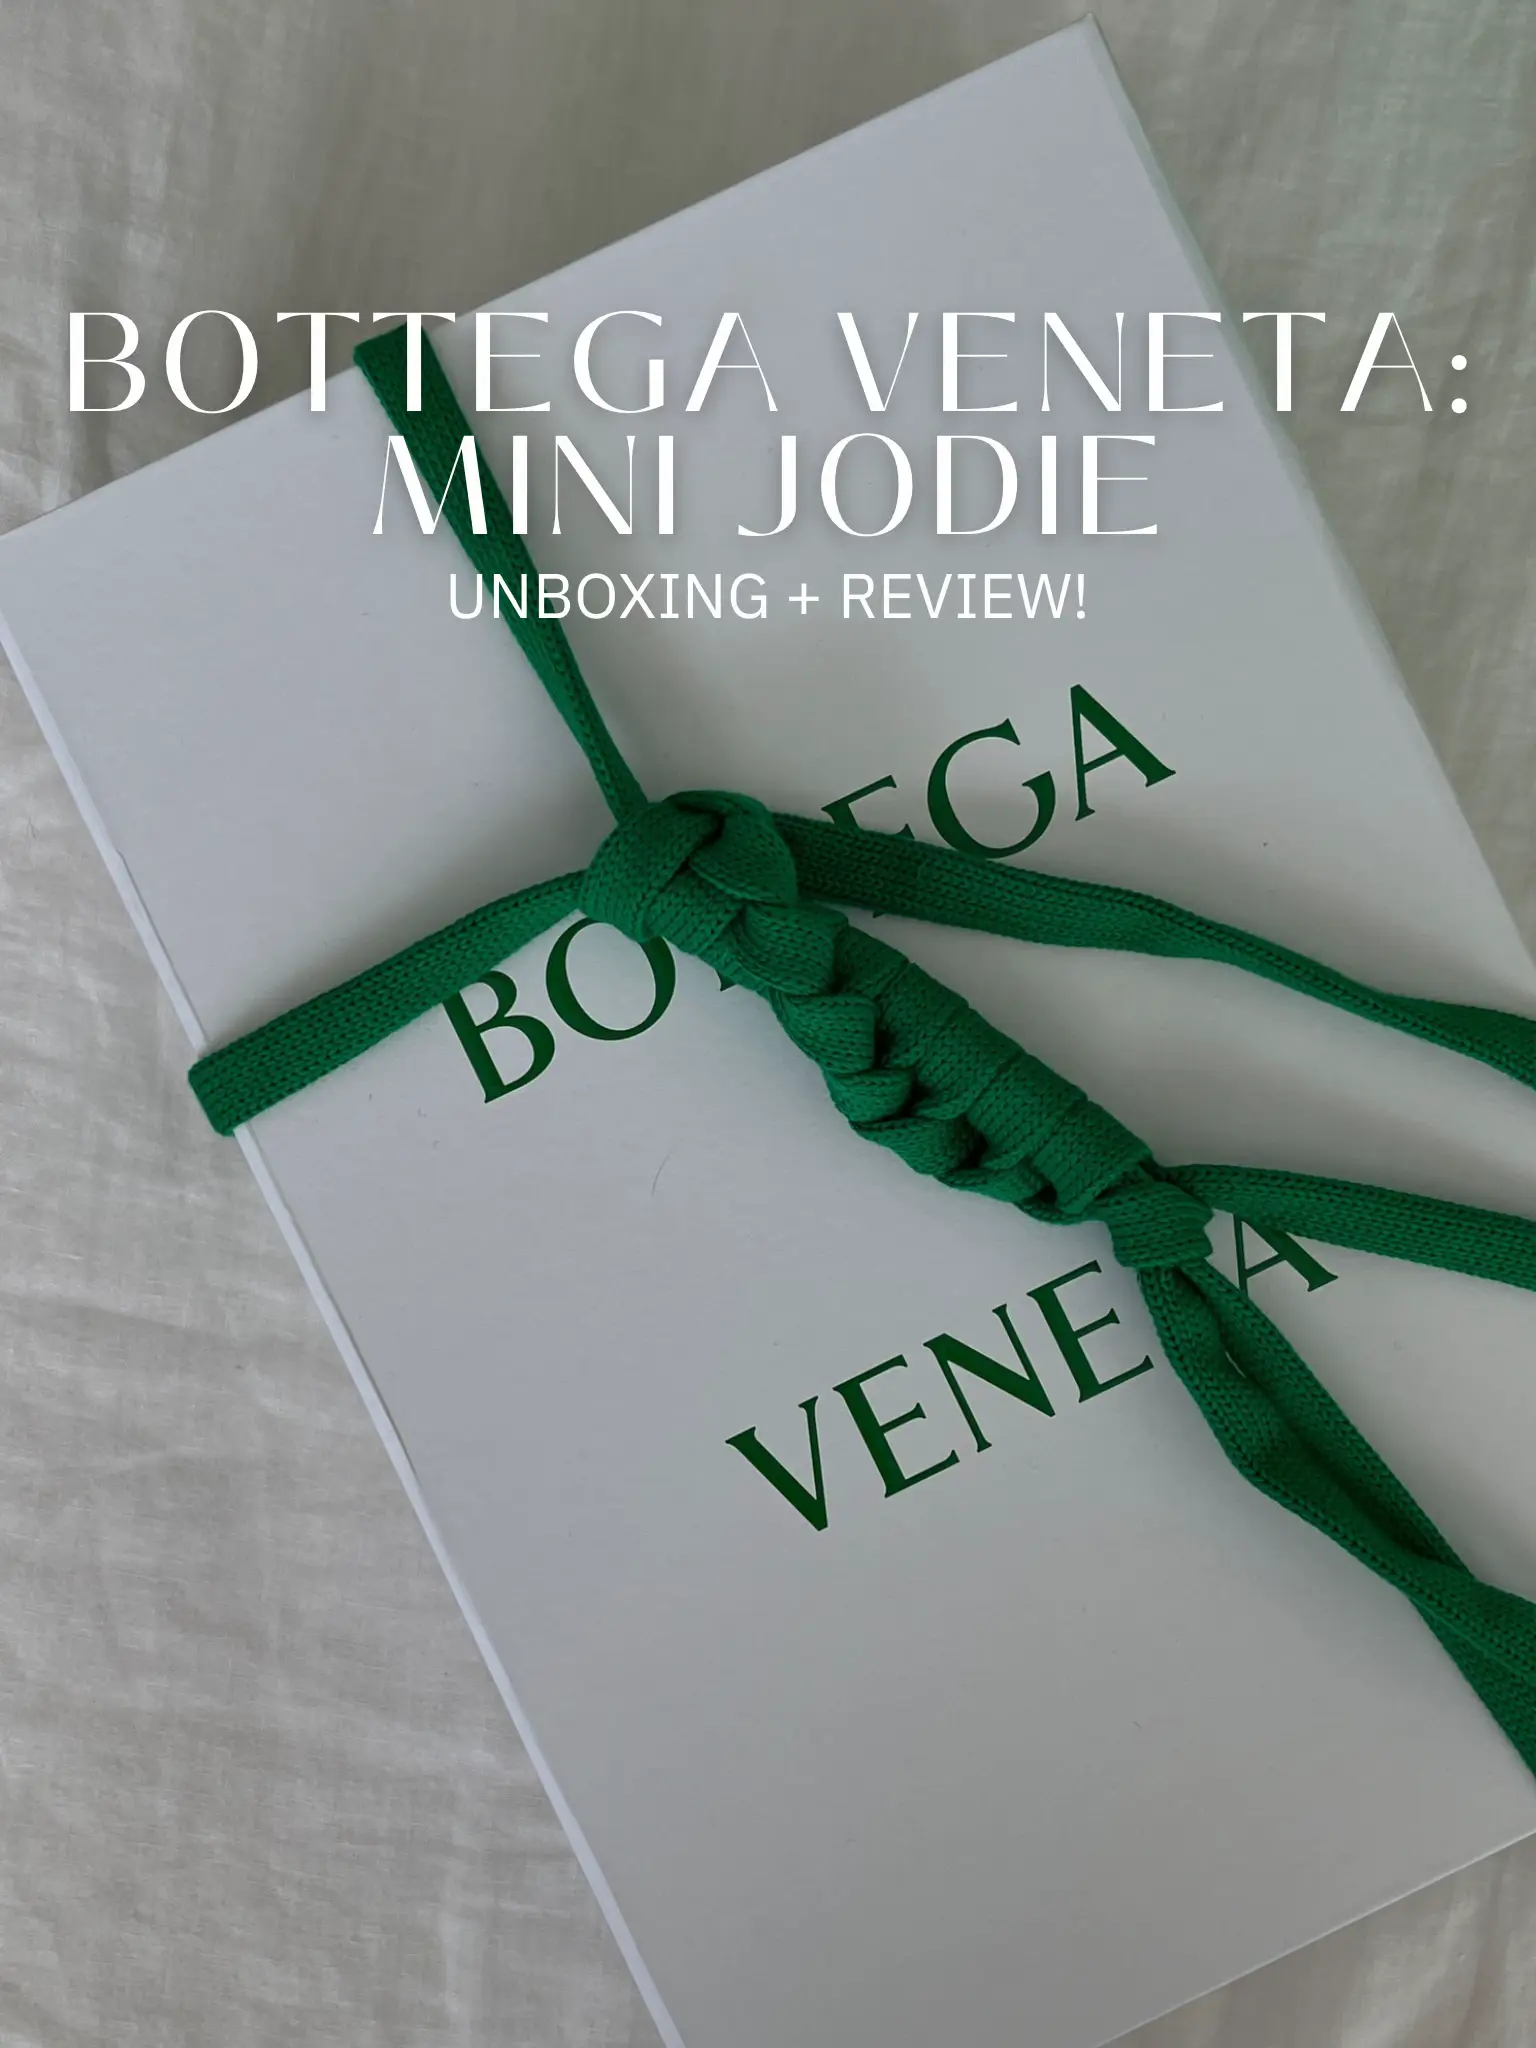 Unboxing Bottega Veneta mini Jodie!! New mini Jodie  #leatherhandbag#minijodie#bottegaveneta#handbag 